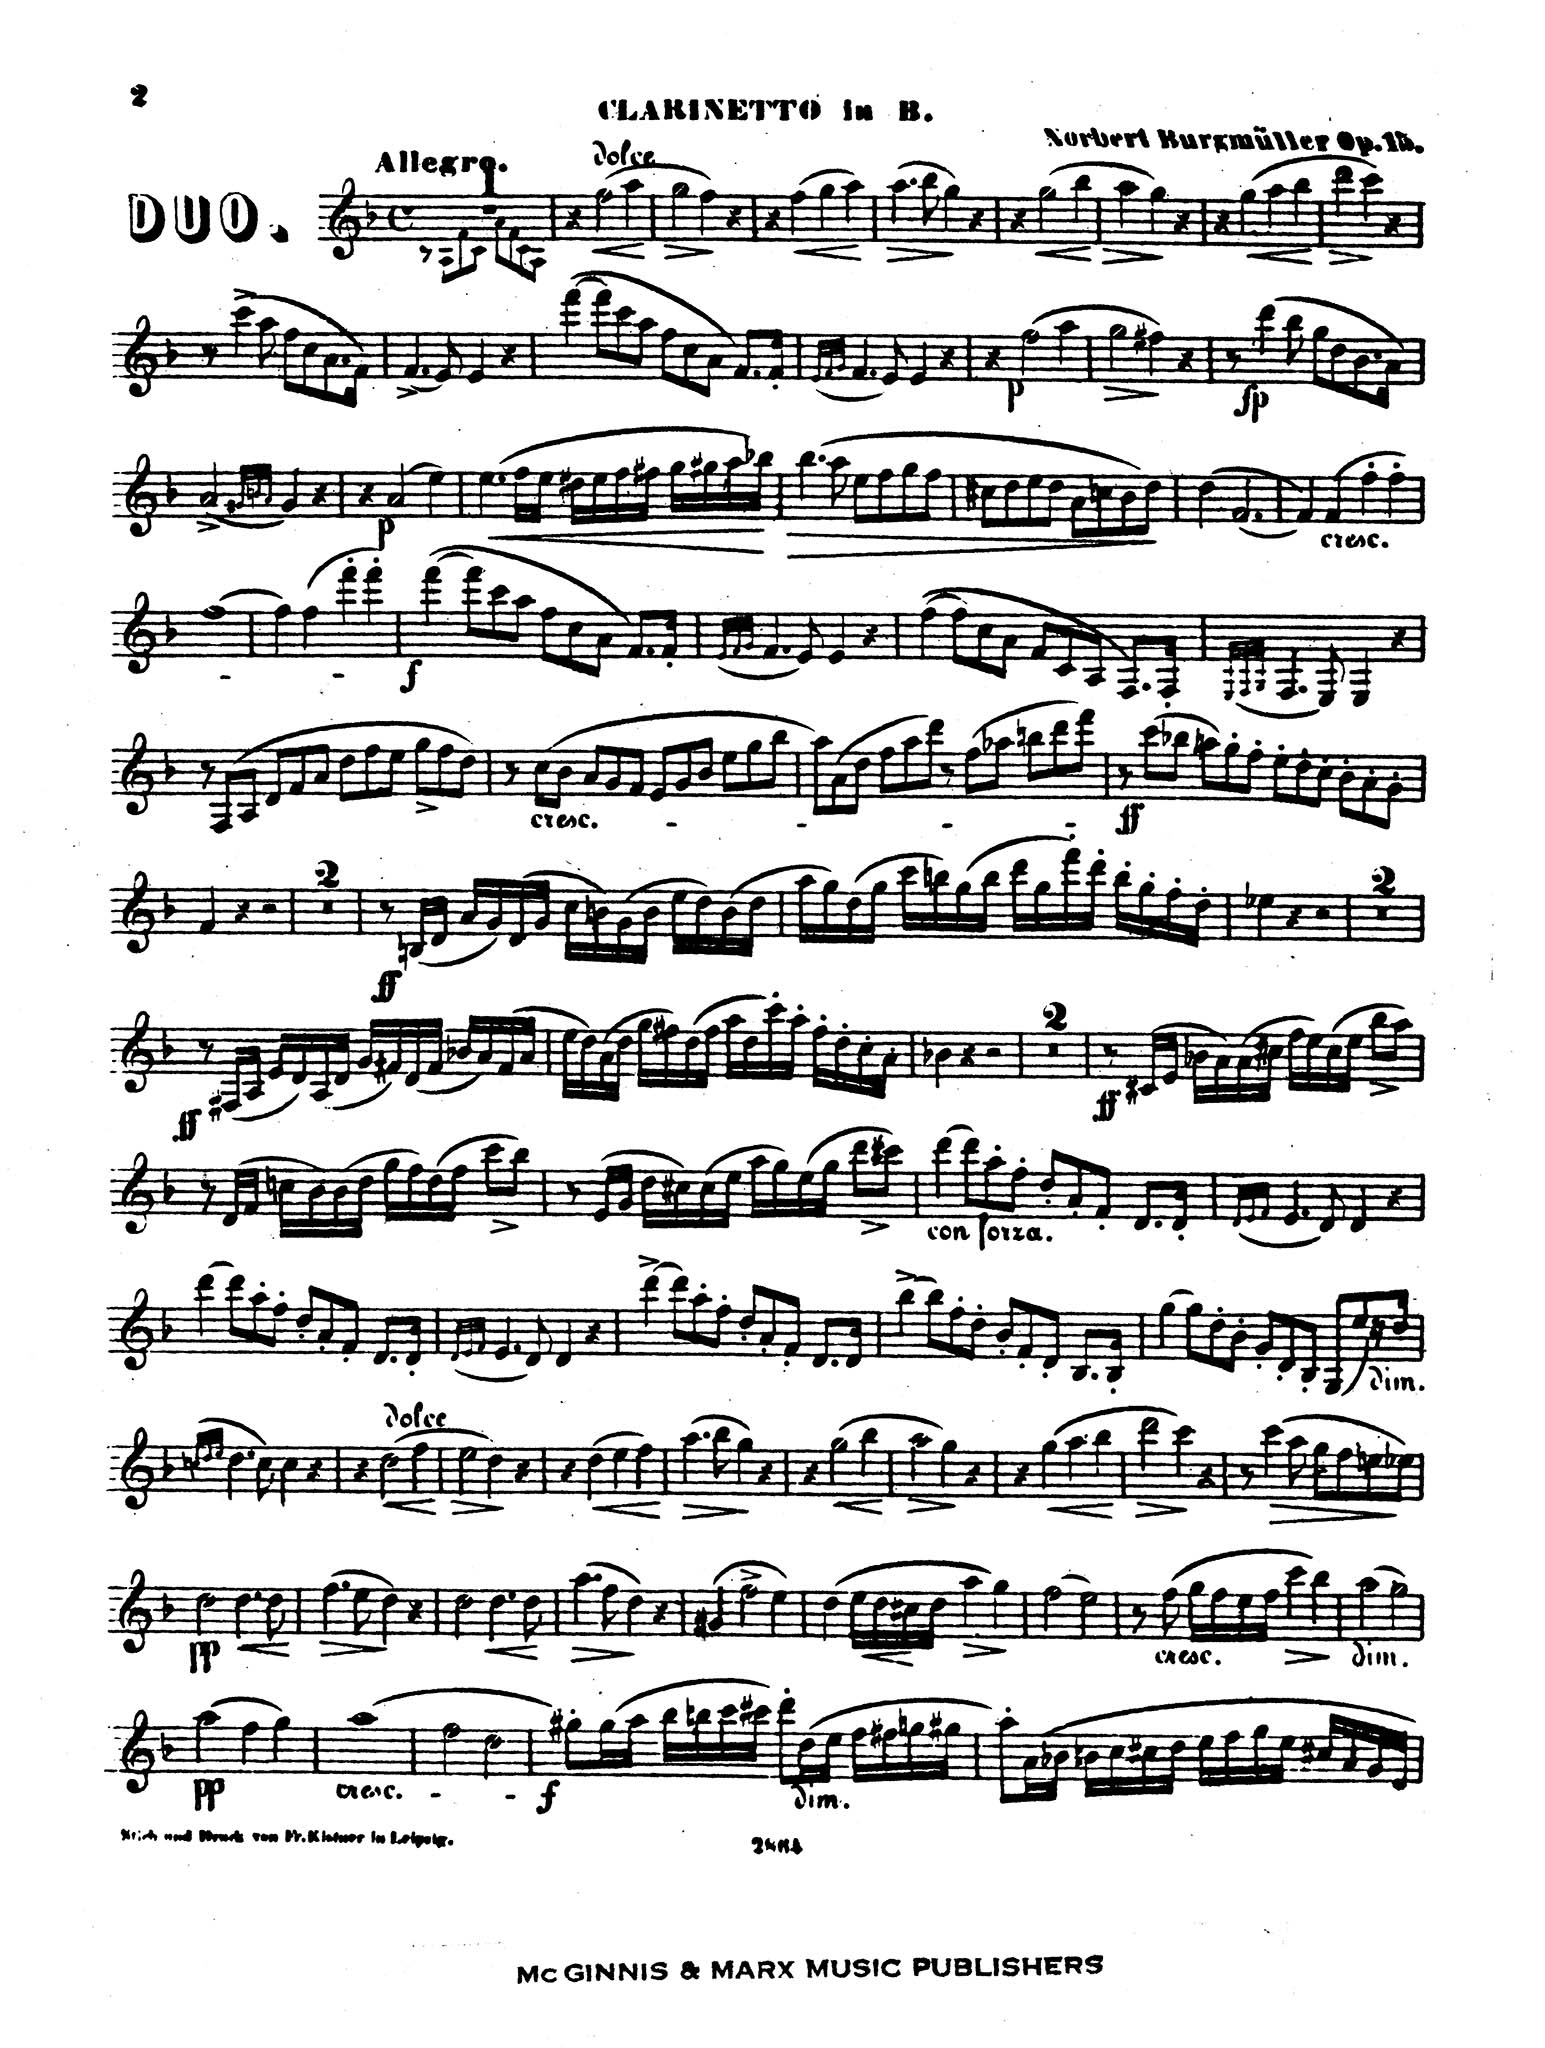 Duo in E-flat Major, Op. 15 Clarinet part